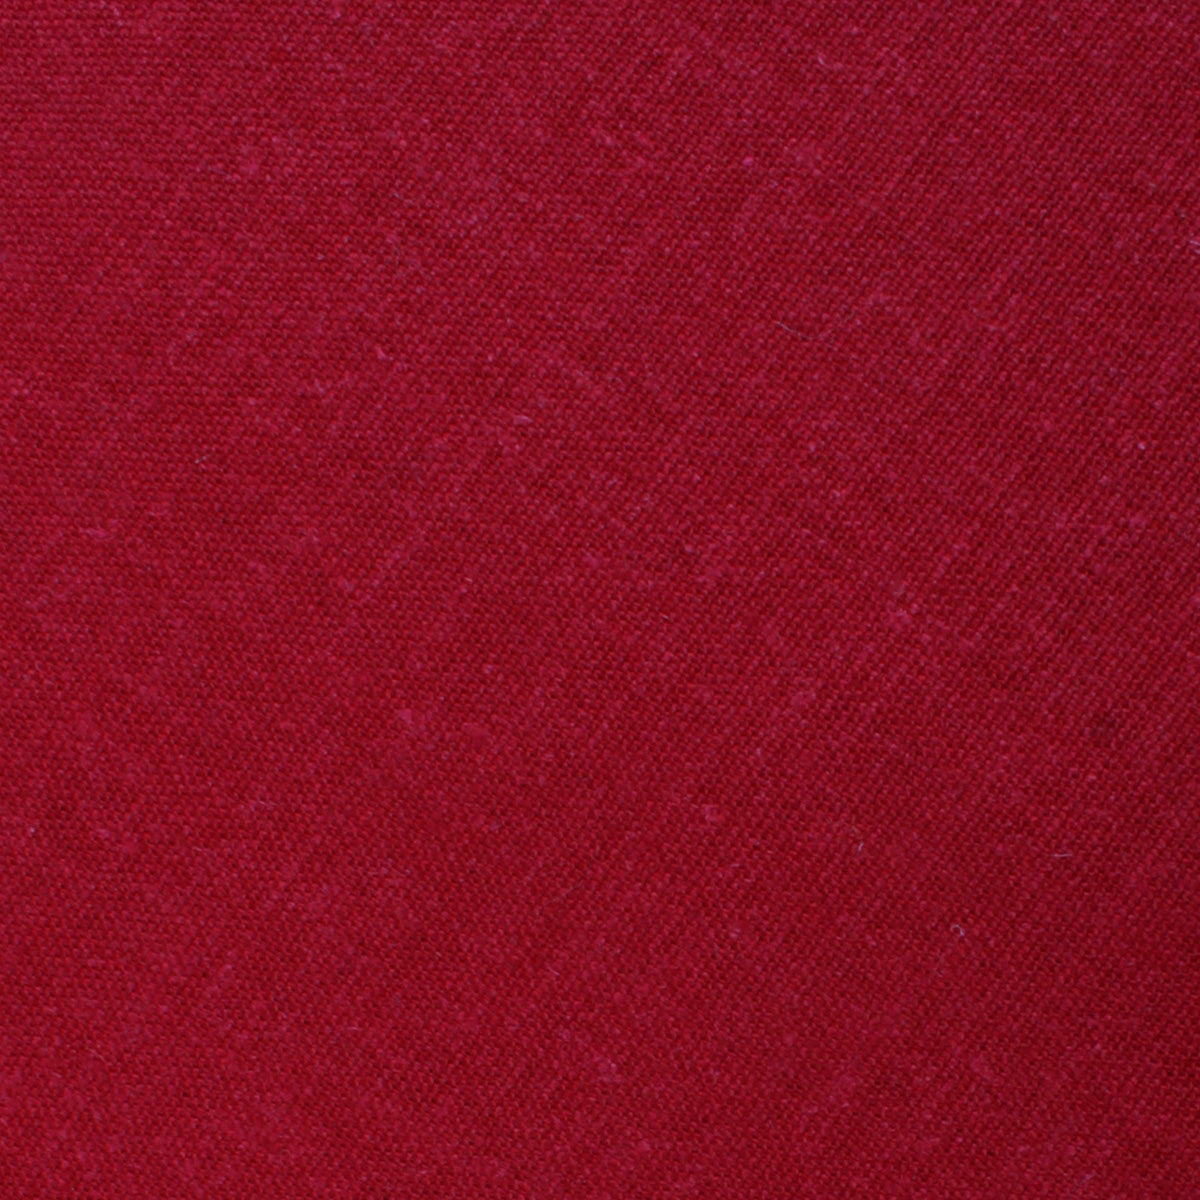 Apple Maroon Linen Pocket Square Fabric